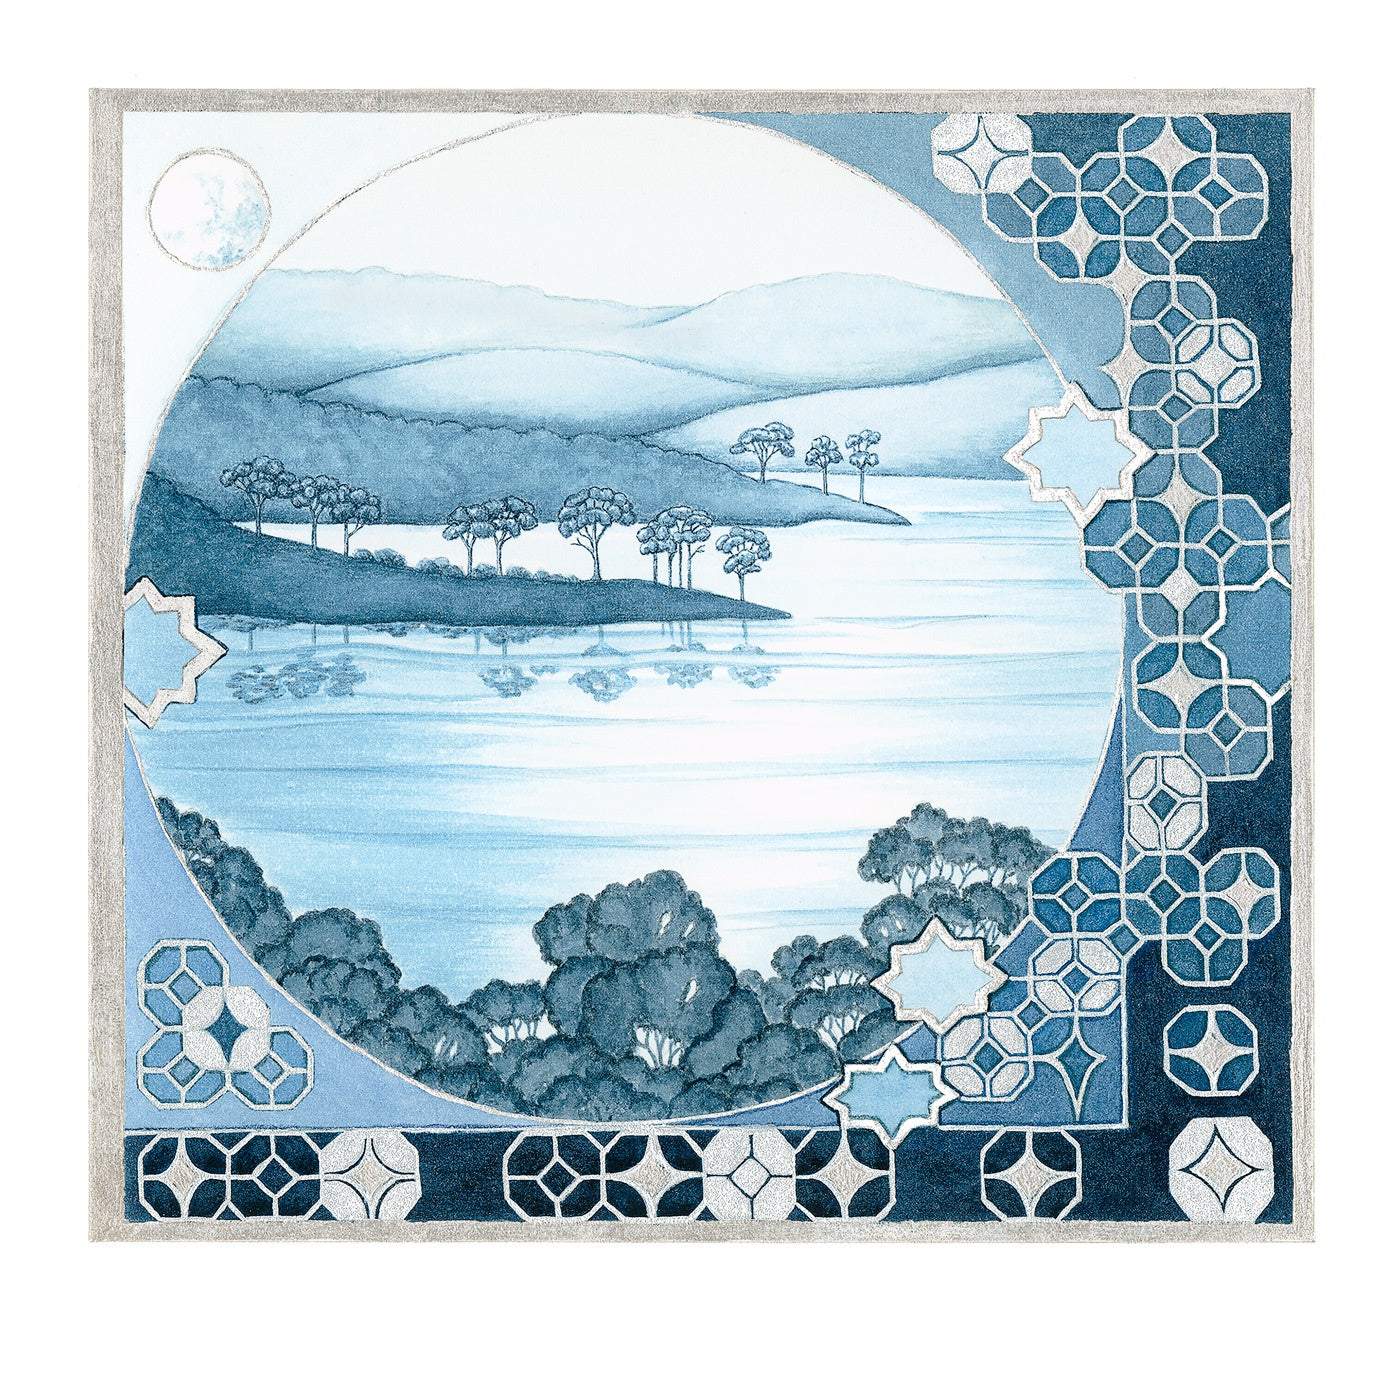 Sylvie Gerozisis - Landscapes of Tasmania - Art Print - Moonlight on Umbrella Point Bruny Island, Tasmania